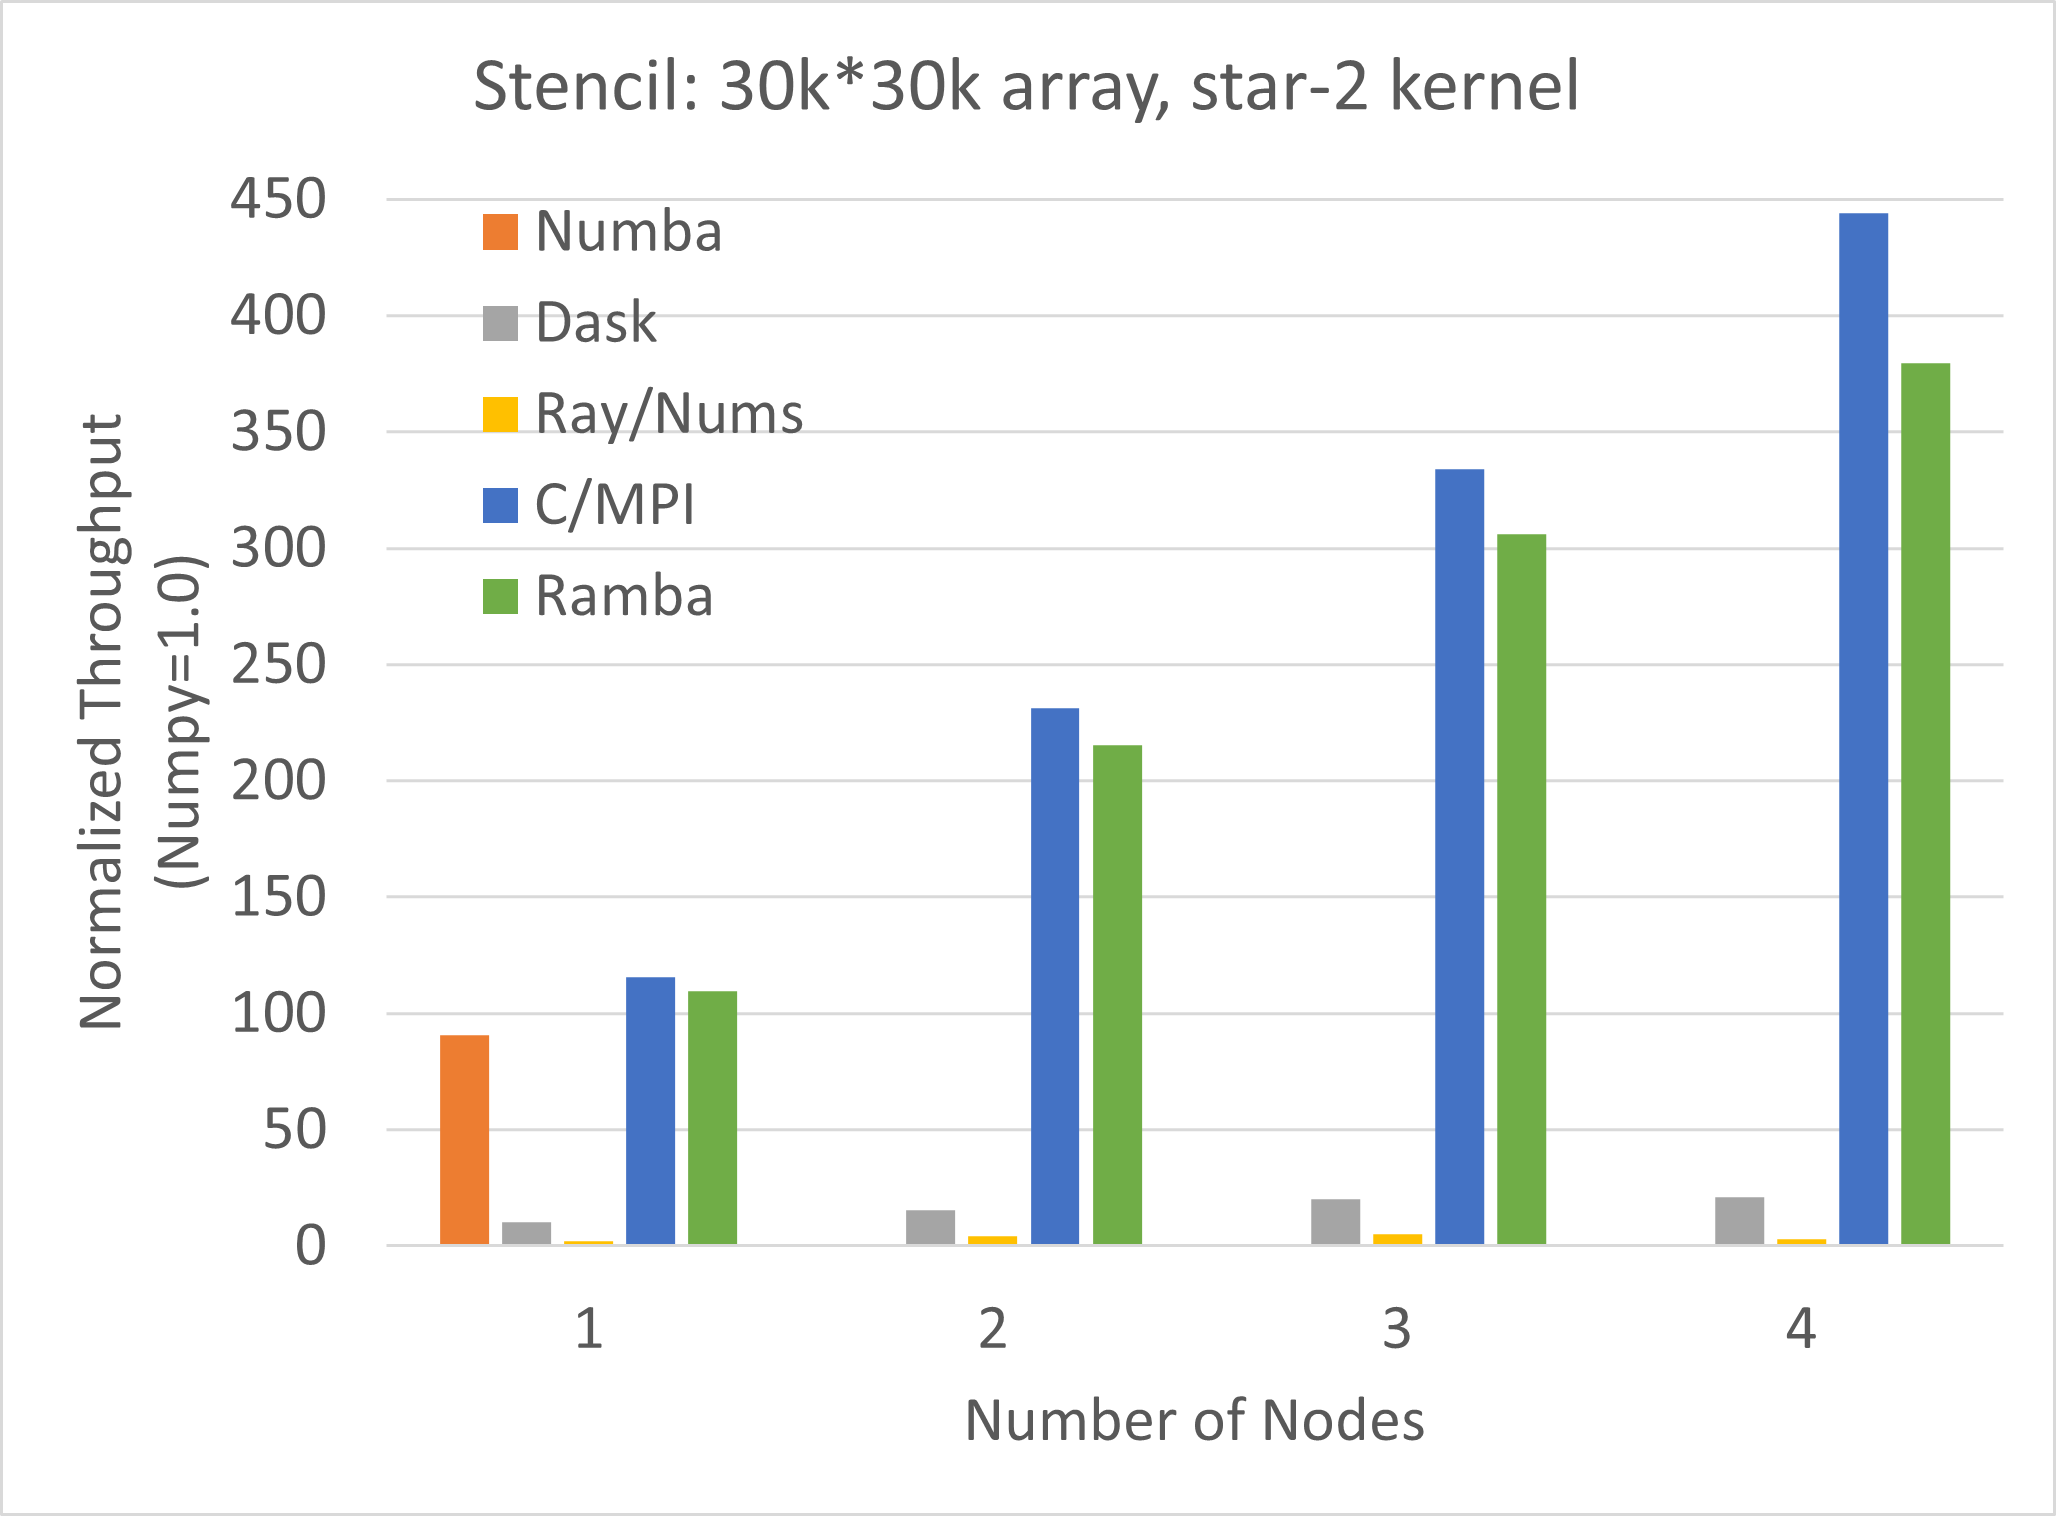 Stencil 30k by 30k performance